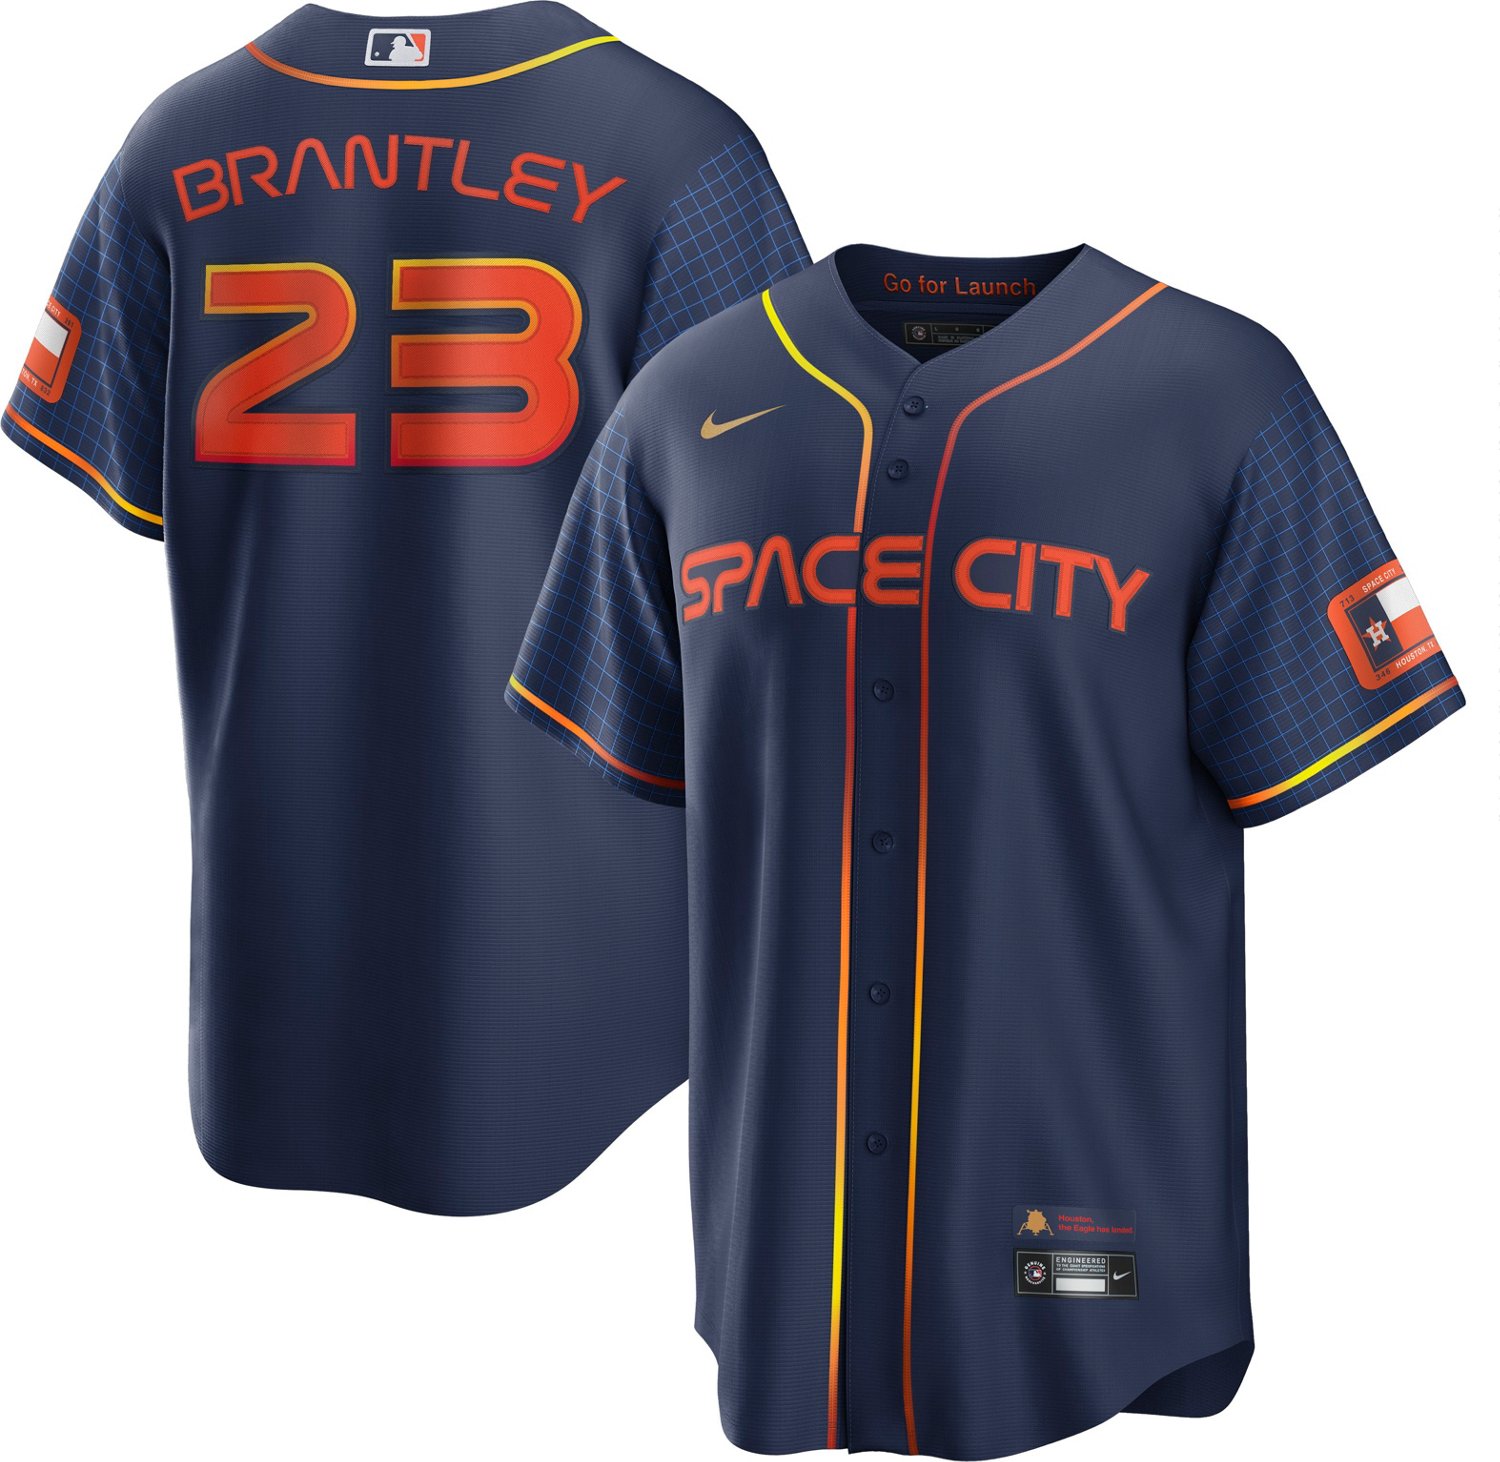 Michael Brantley Jersey  Houston Astros Michael Brantley Jerseys - Astros  Store